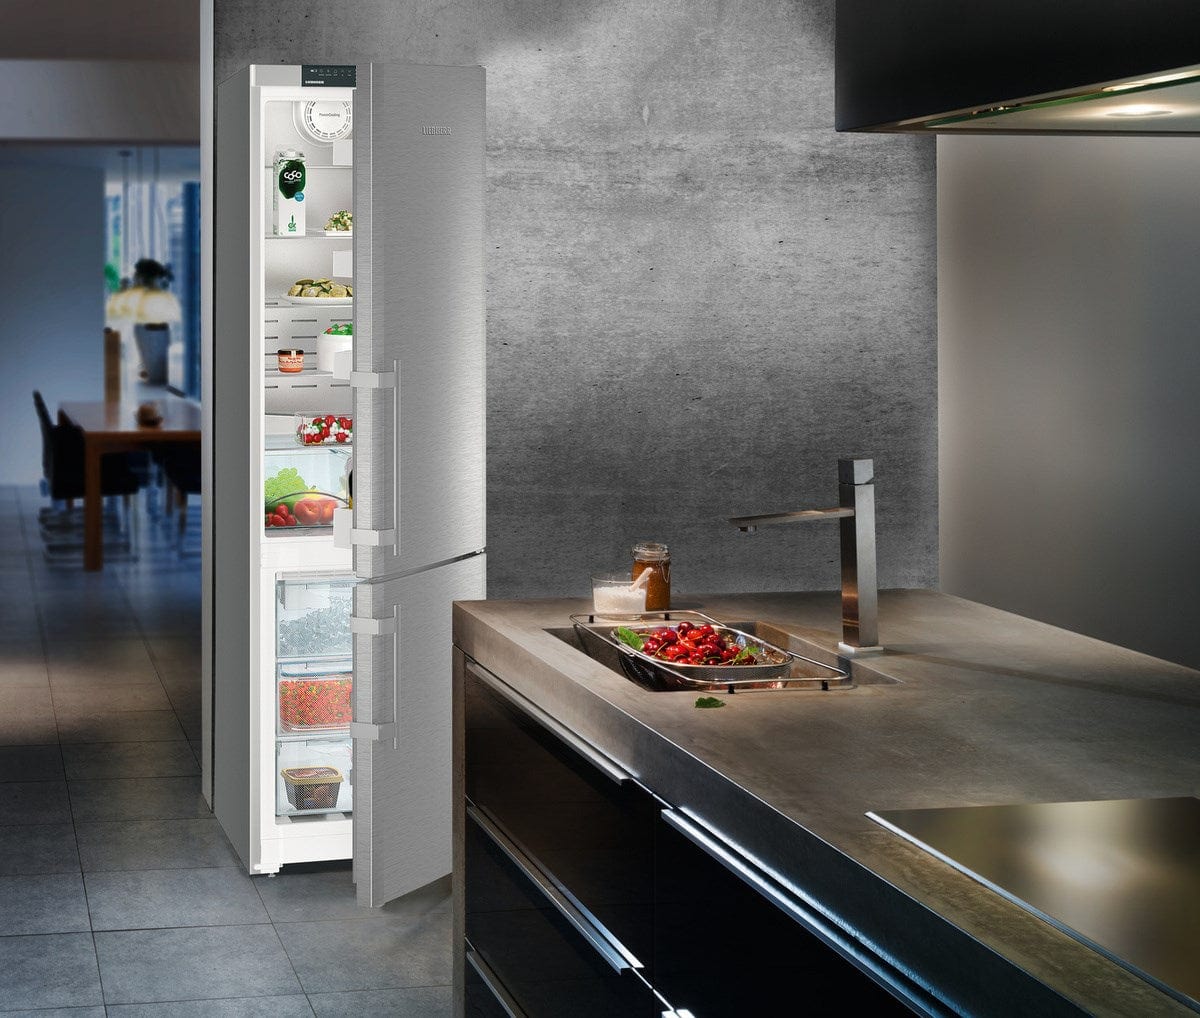 Liebherr 24" CS 1360B Reversible Stainless Freestanding Fridge-Freezer Refrigerators CS 1360B Luxury Appliances Direct